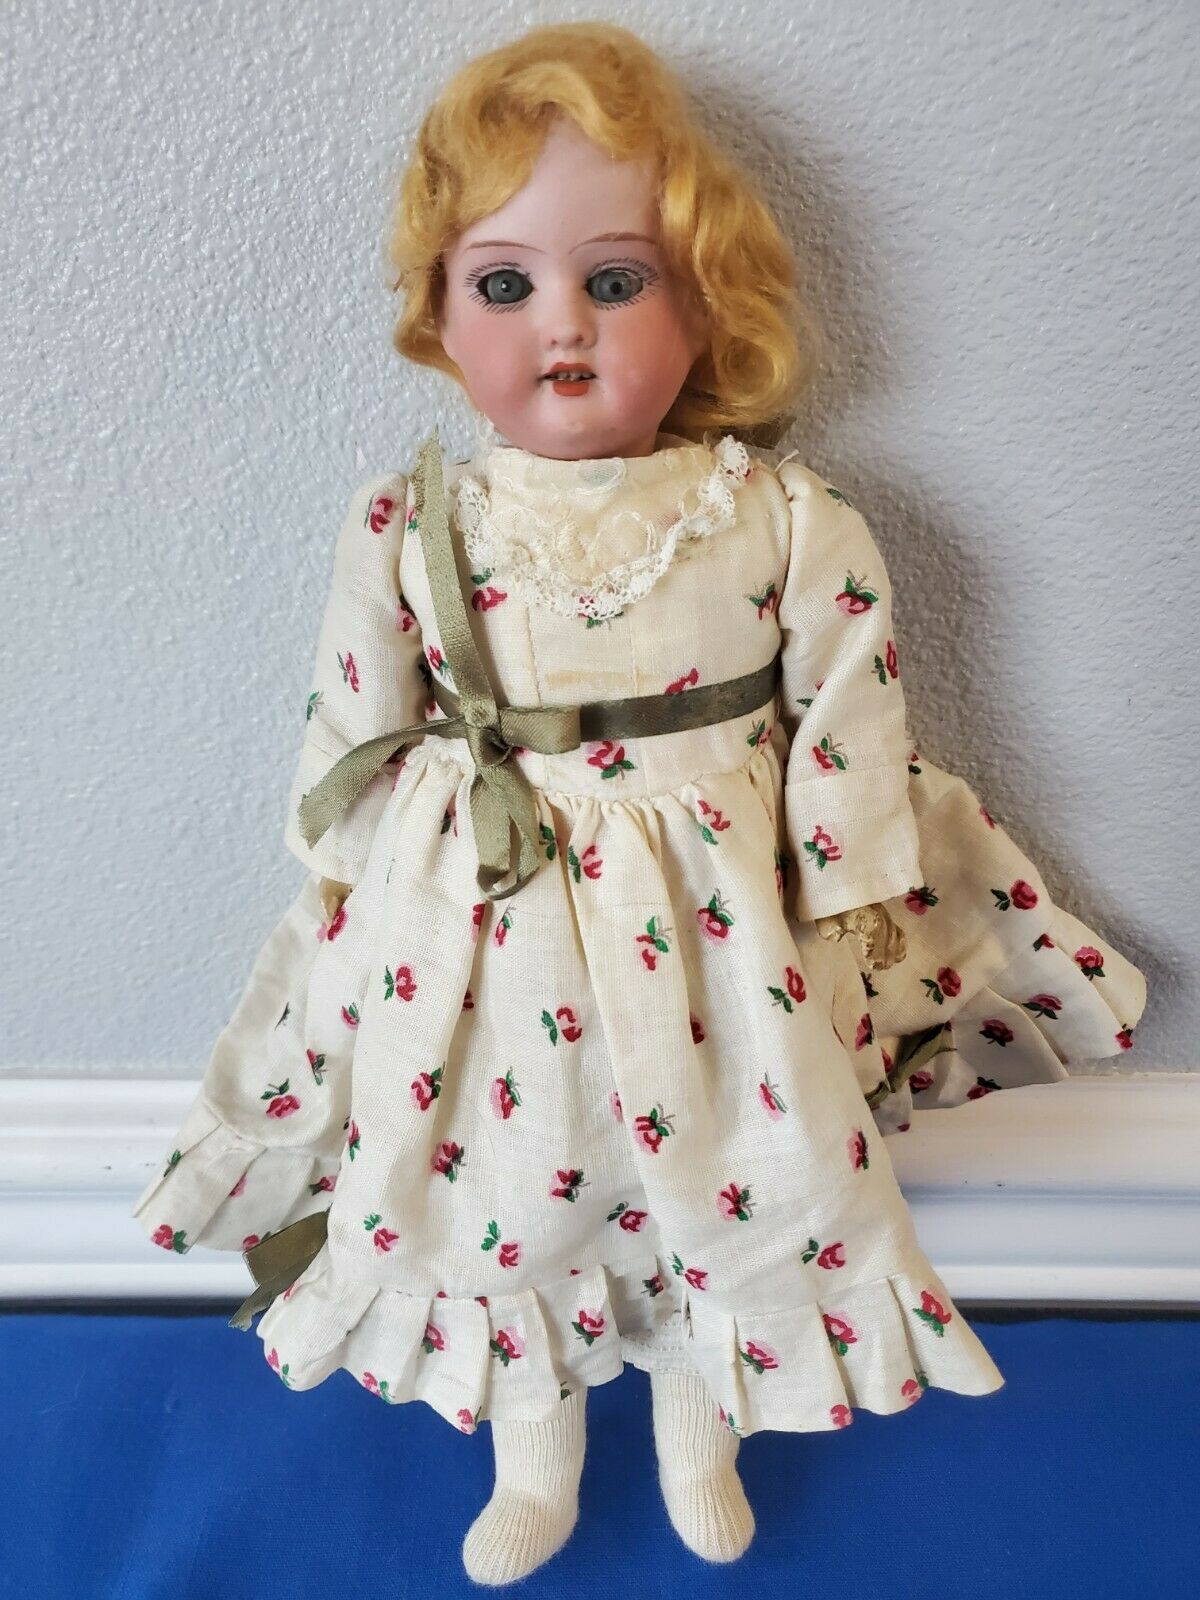 Antique Armand Marseille German Bisque Composition Doll 390 10/0 10" Tall Blonde